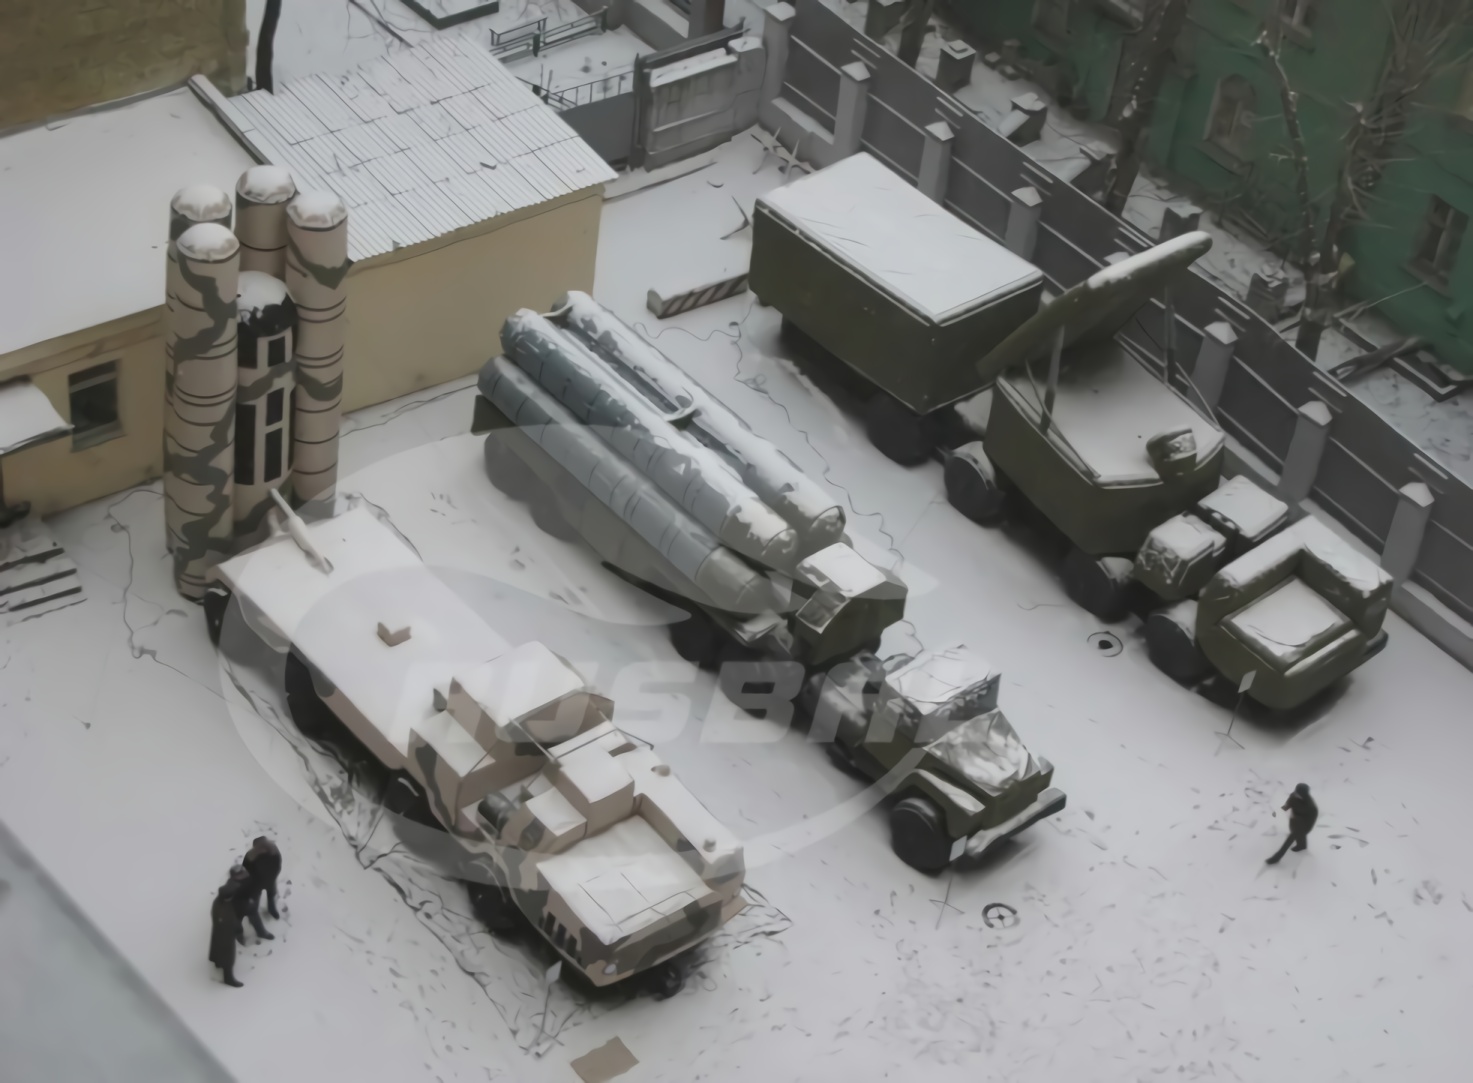 Ukraine's Decoy in preparation for the invasion of Russia.